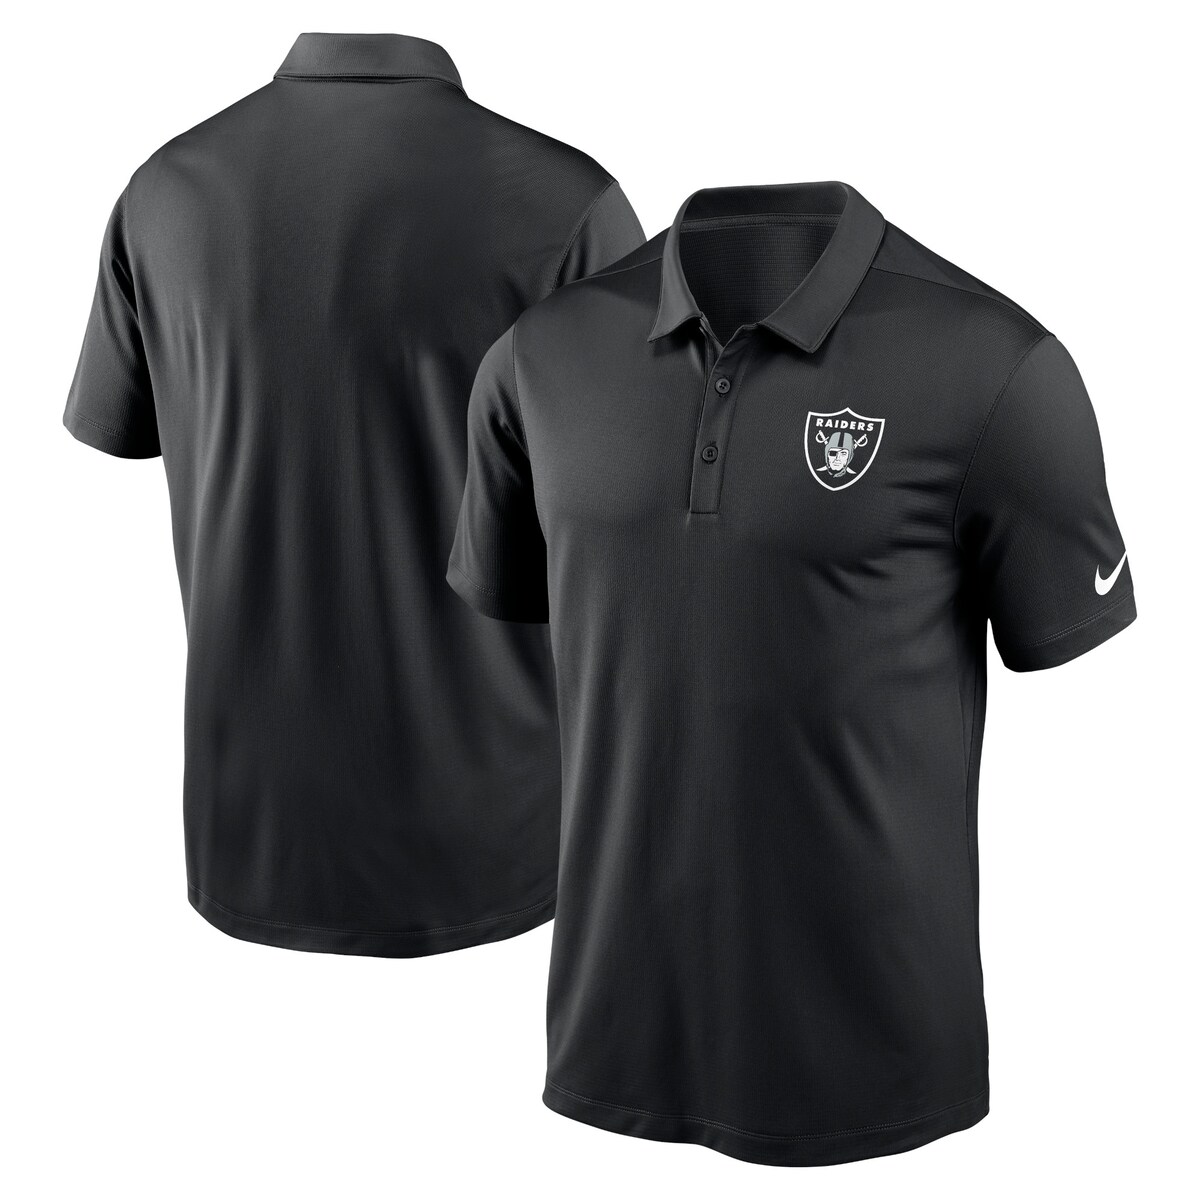 yObYzNFL C_[X |Vc Nike iCL Y ubN (23 NFL FANGEAR Men's Nike Team Logo Short Sleeve Franchise P)